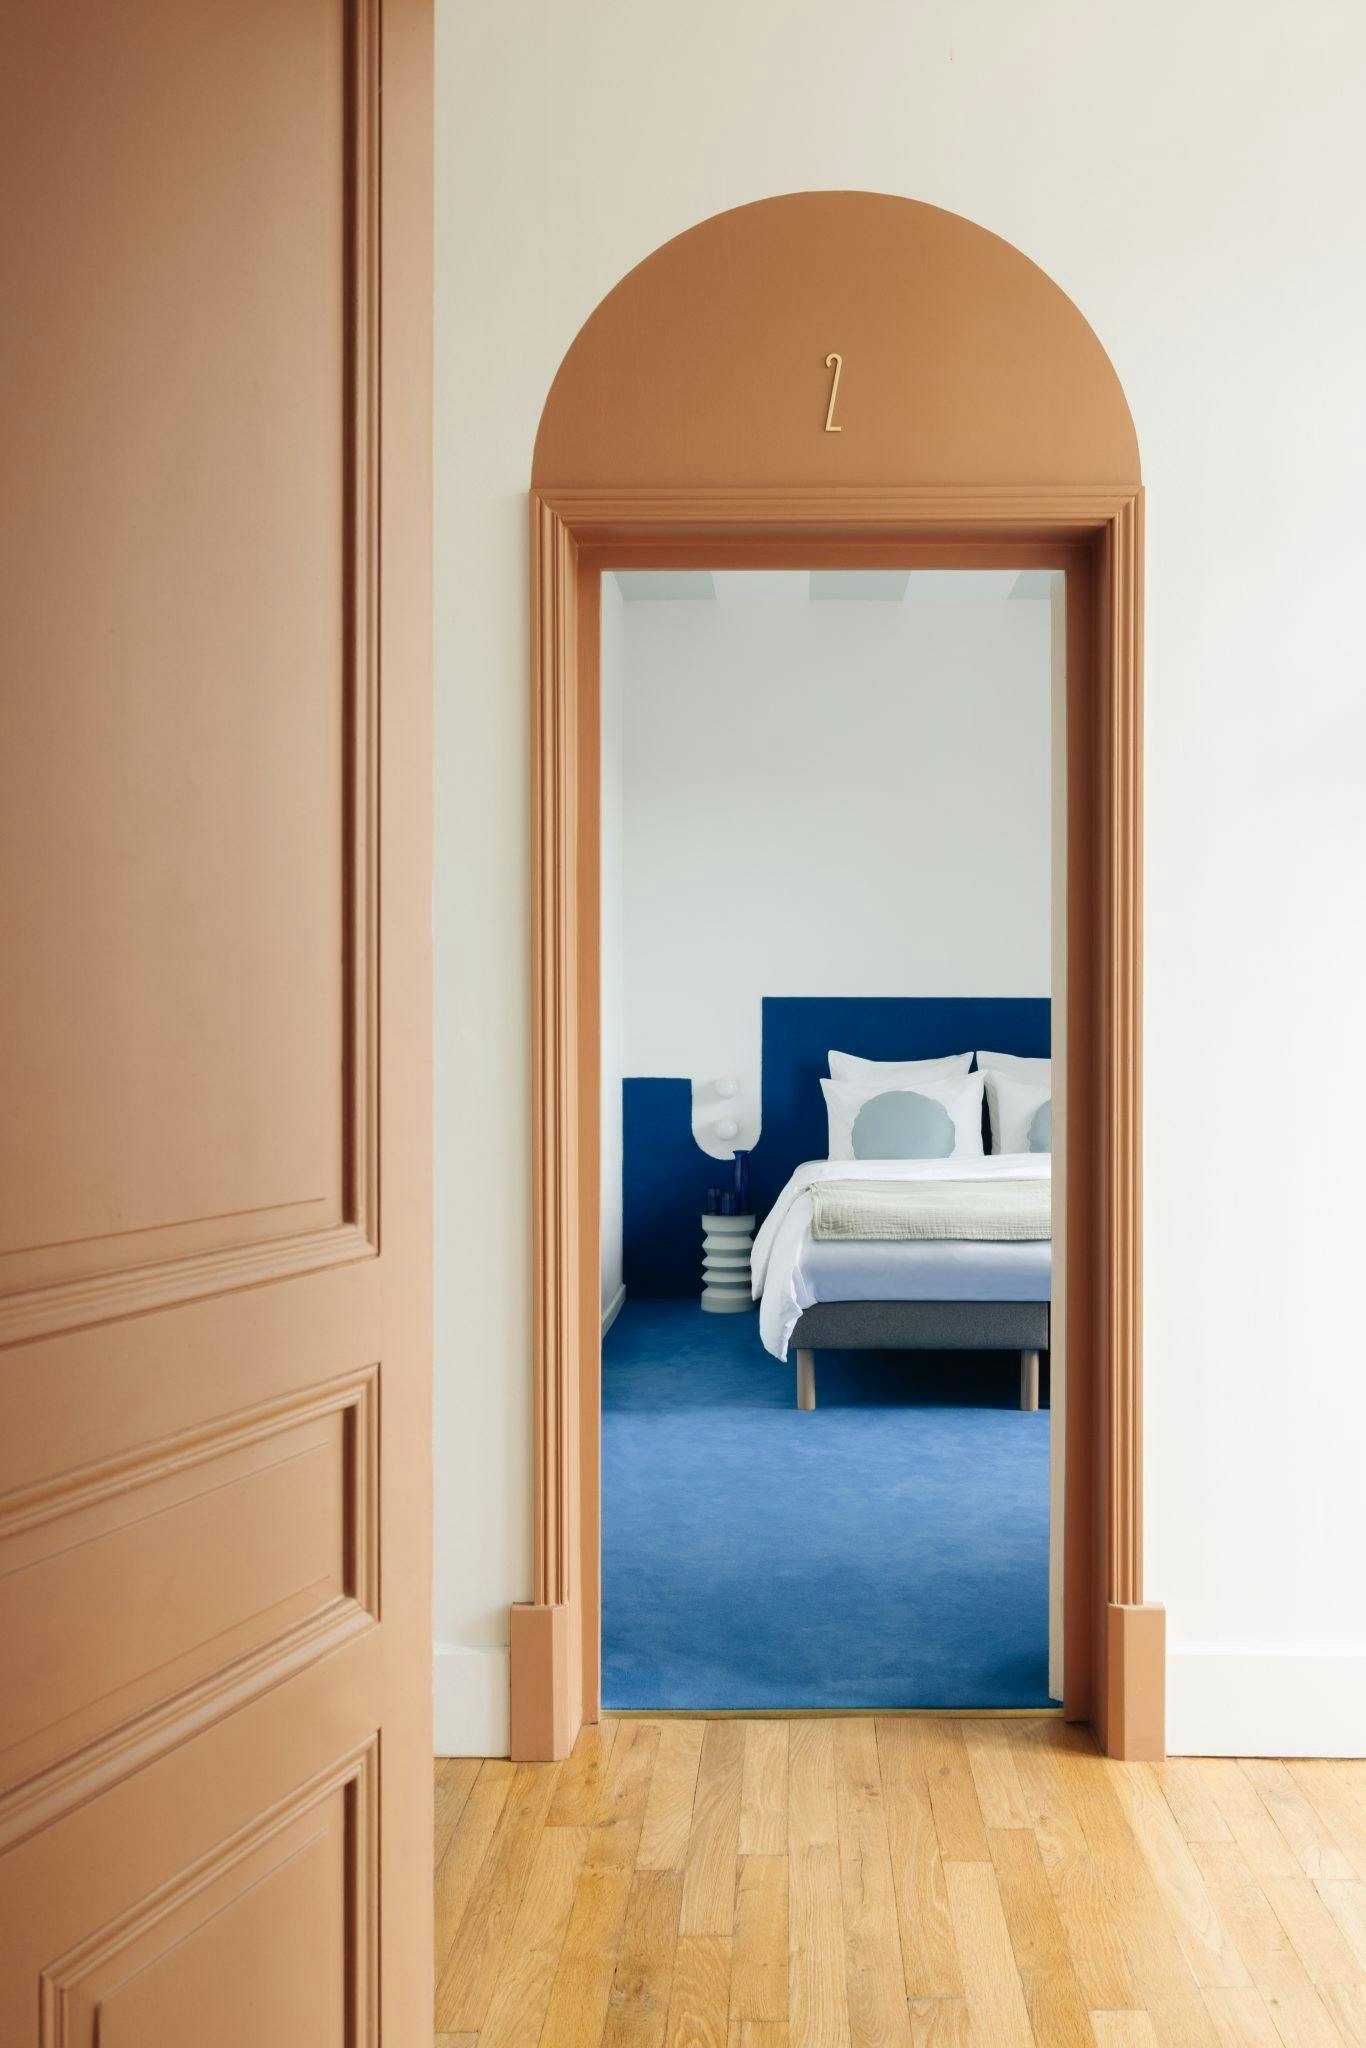 access to the blue bedroom through terracotta entrances